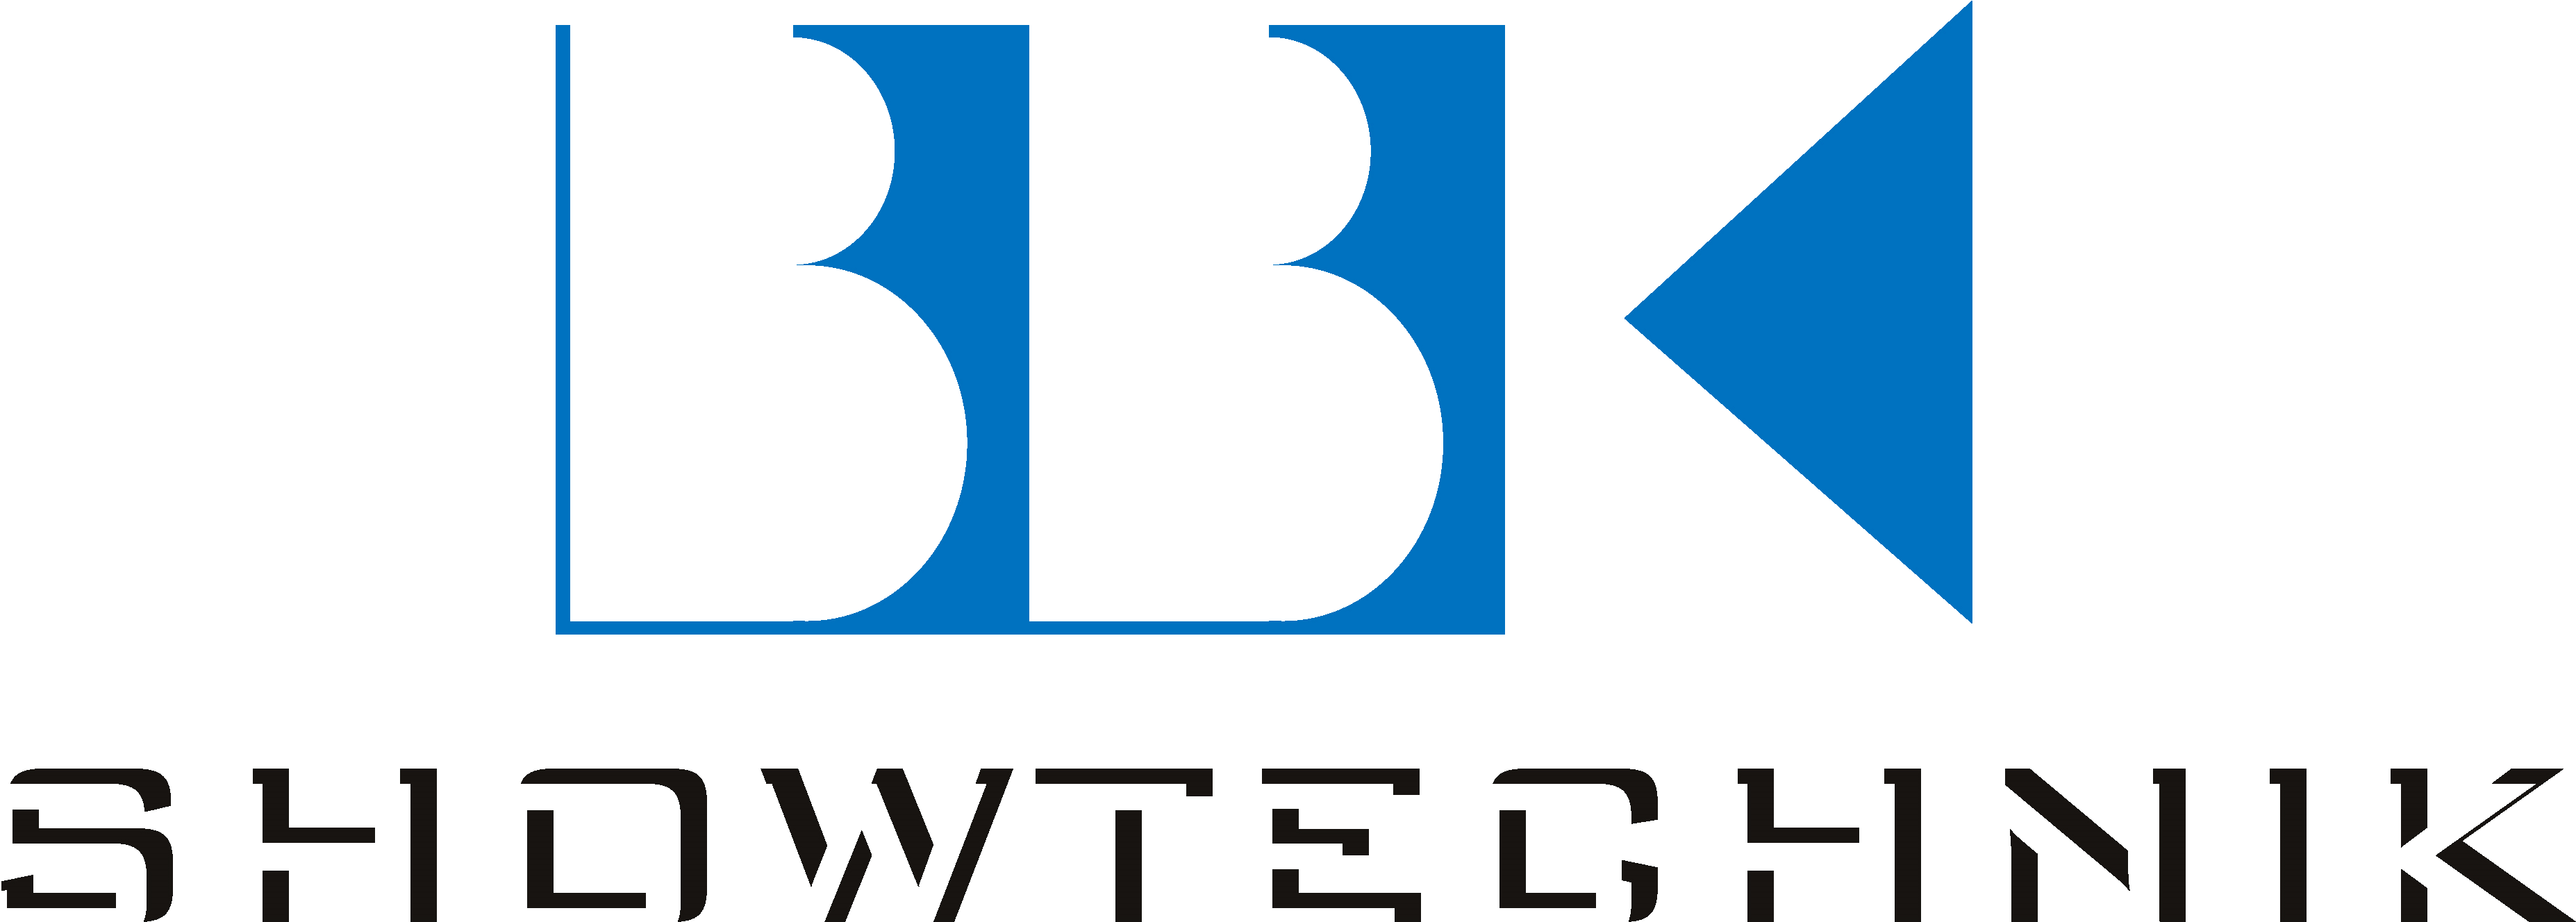 bbk-showtechnik.de